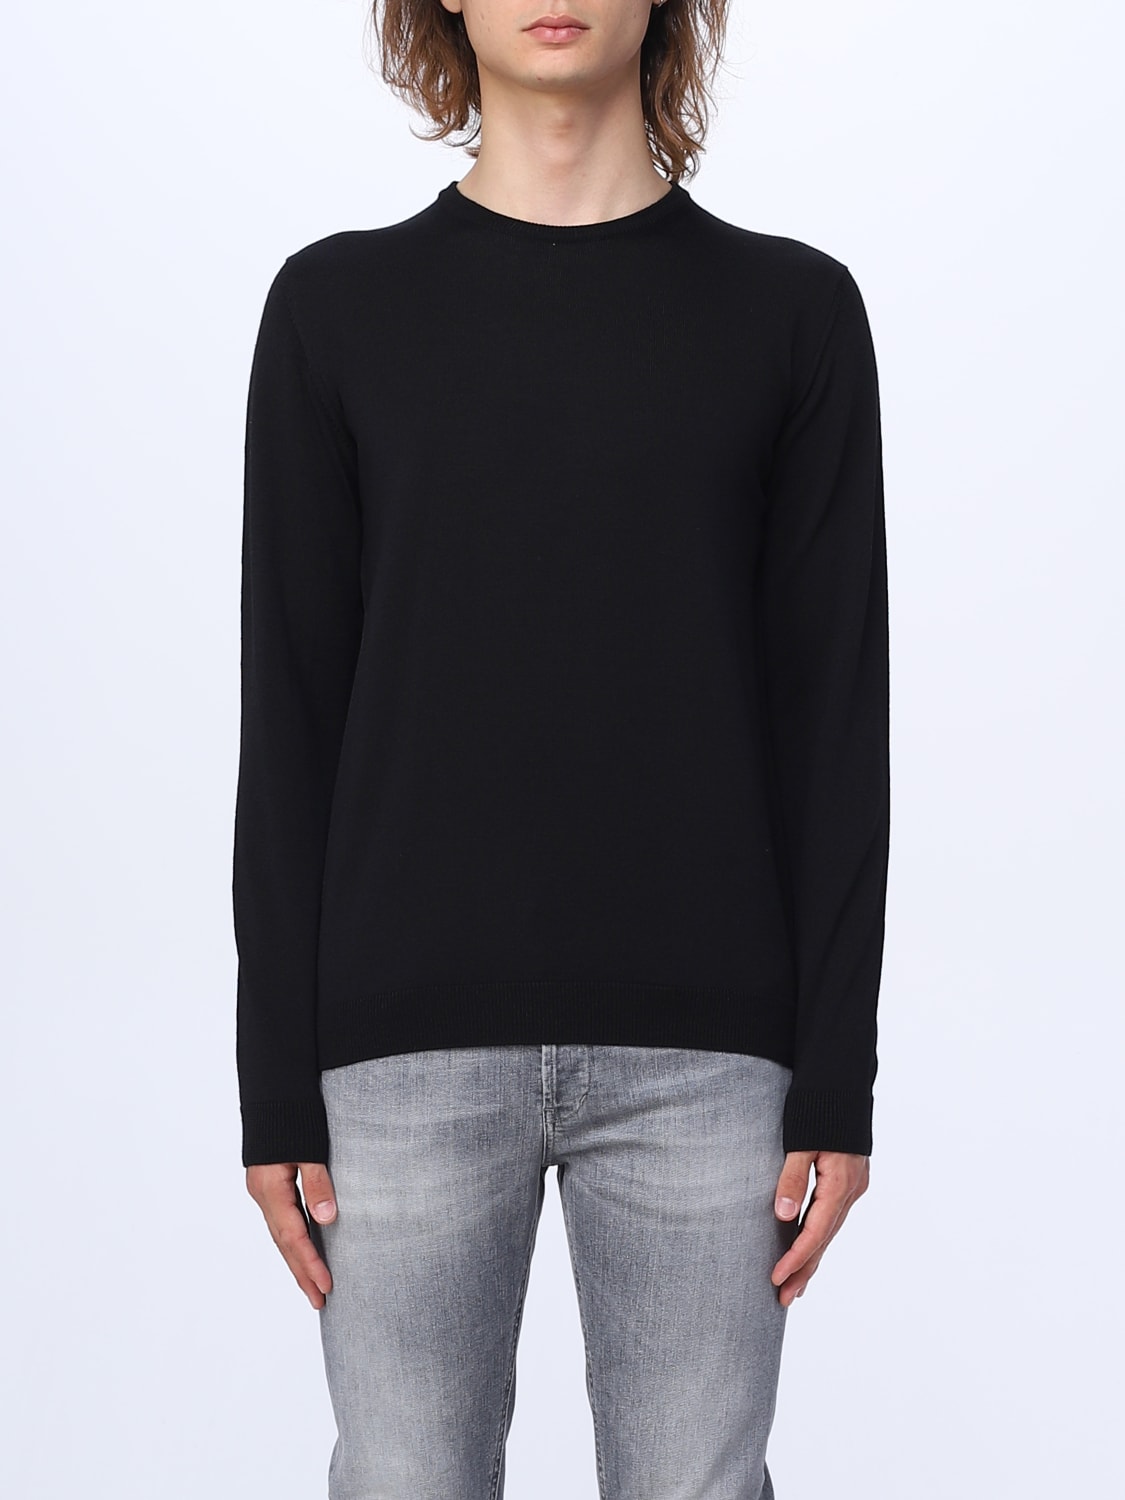 ROBERTO COLLINA: sweater for man - Black | Roberto Collina sweater ...